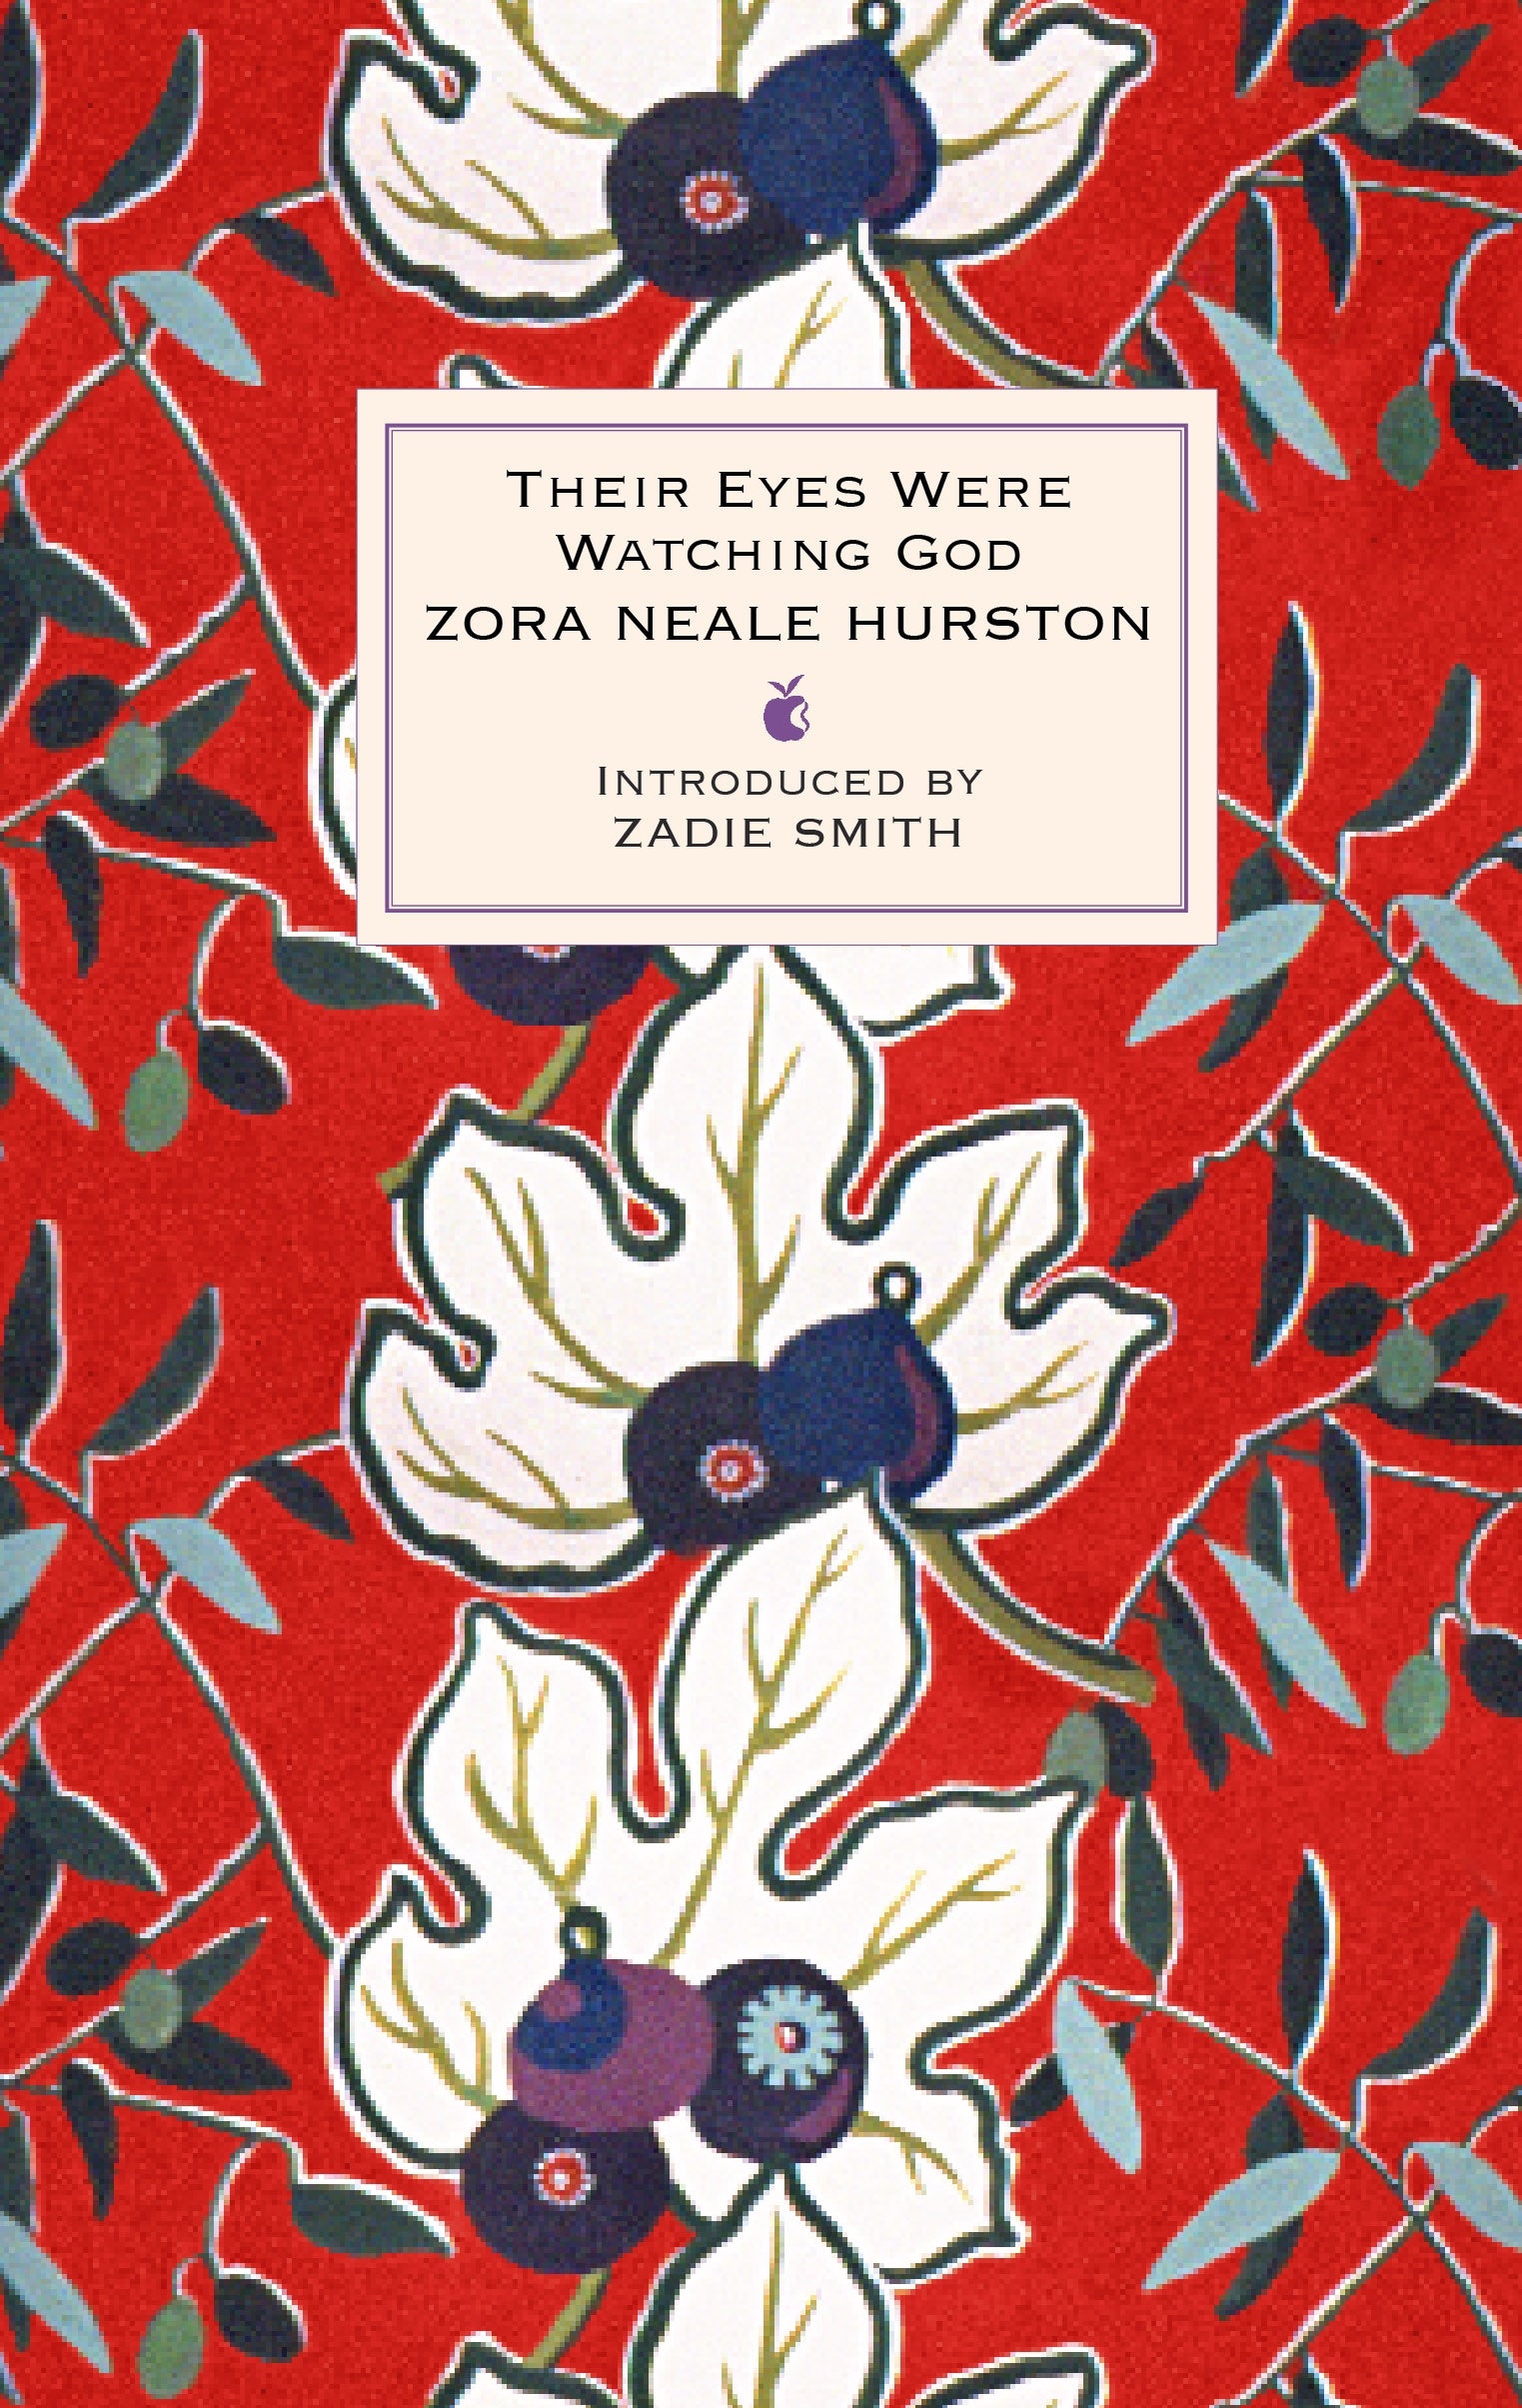 Their Eyes Were Watching God by Zora Neale Hurston